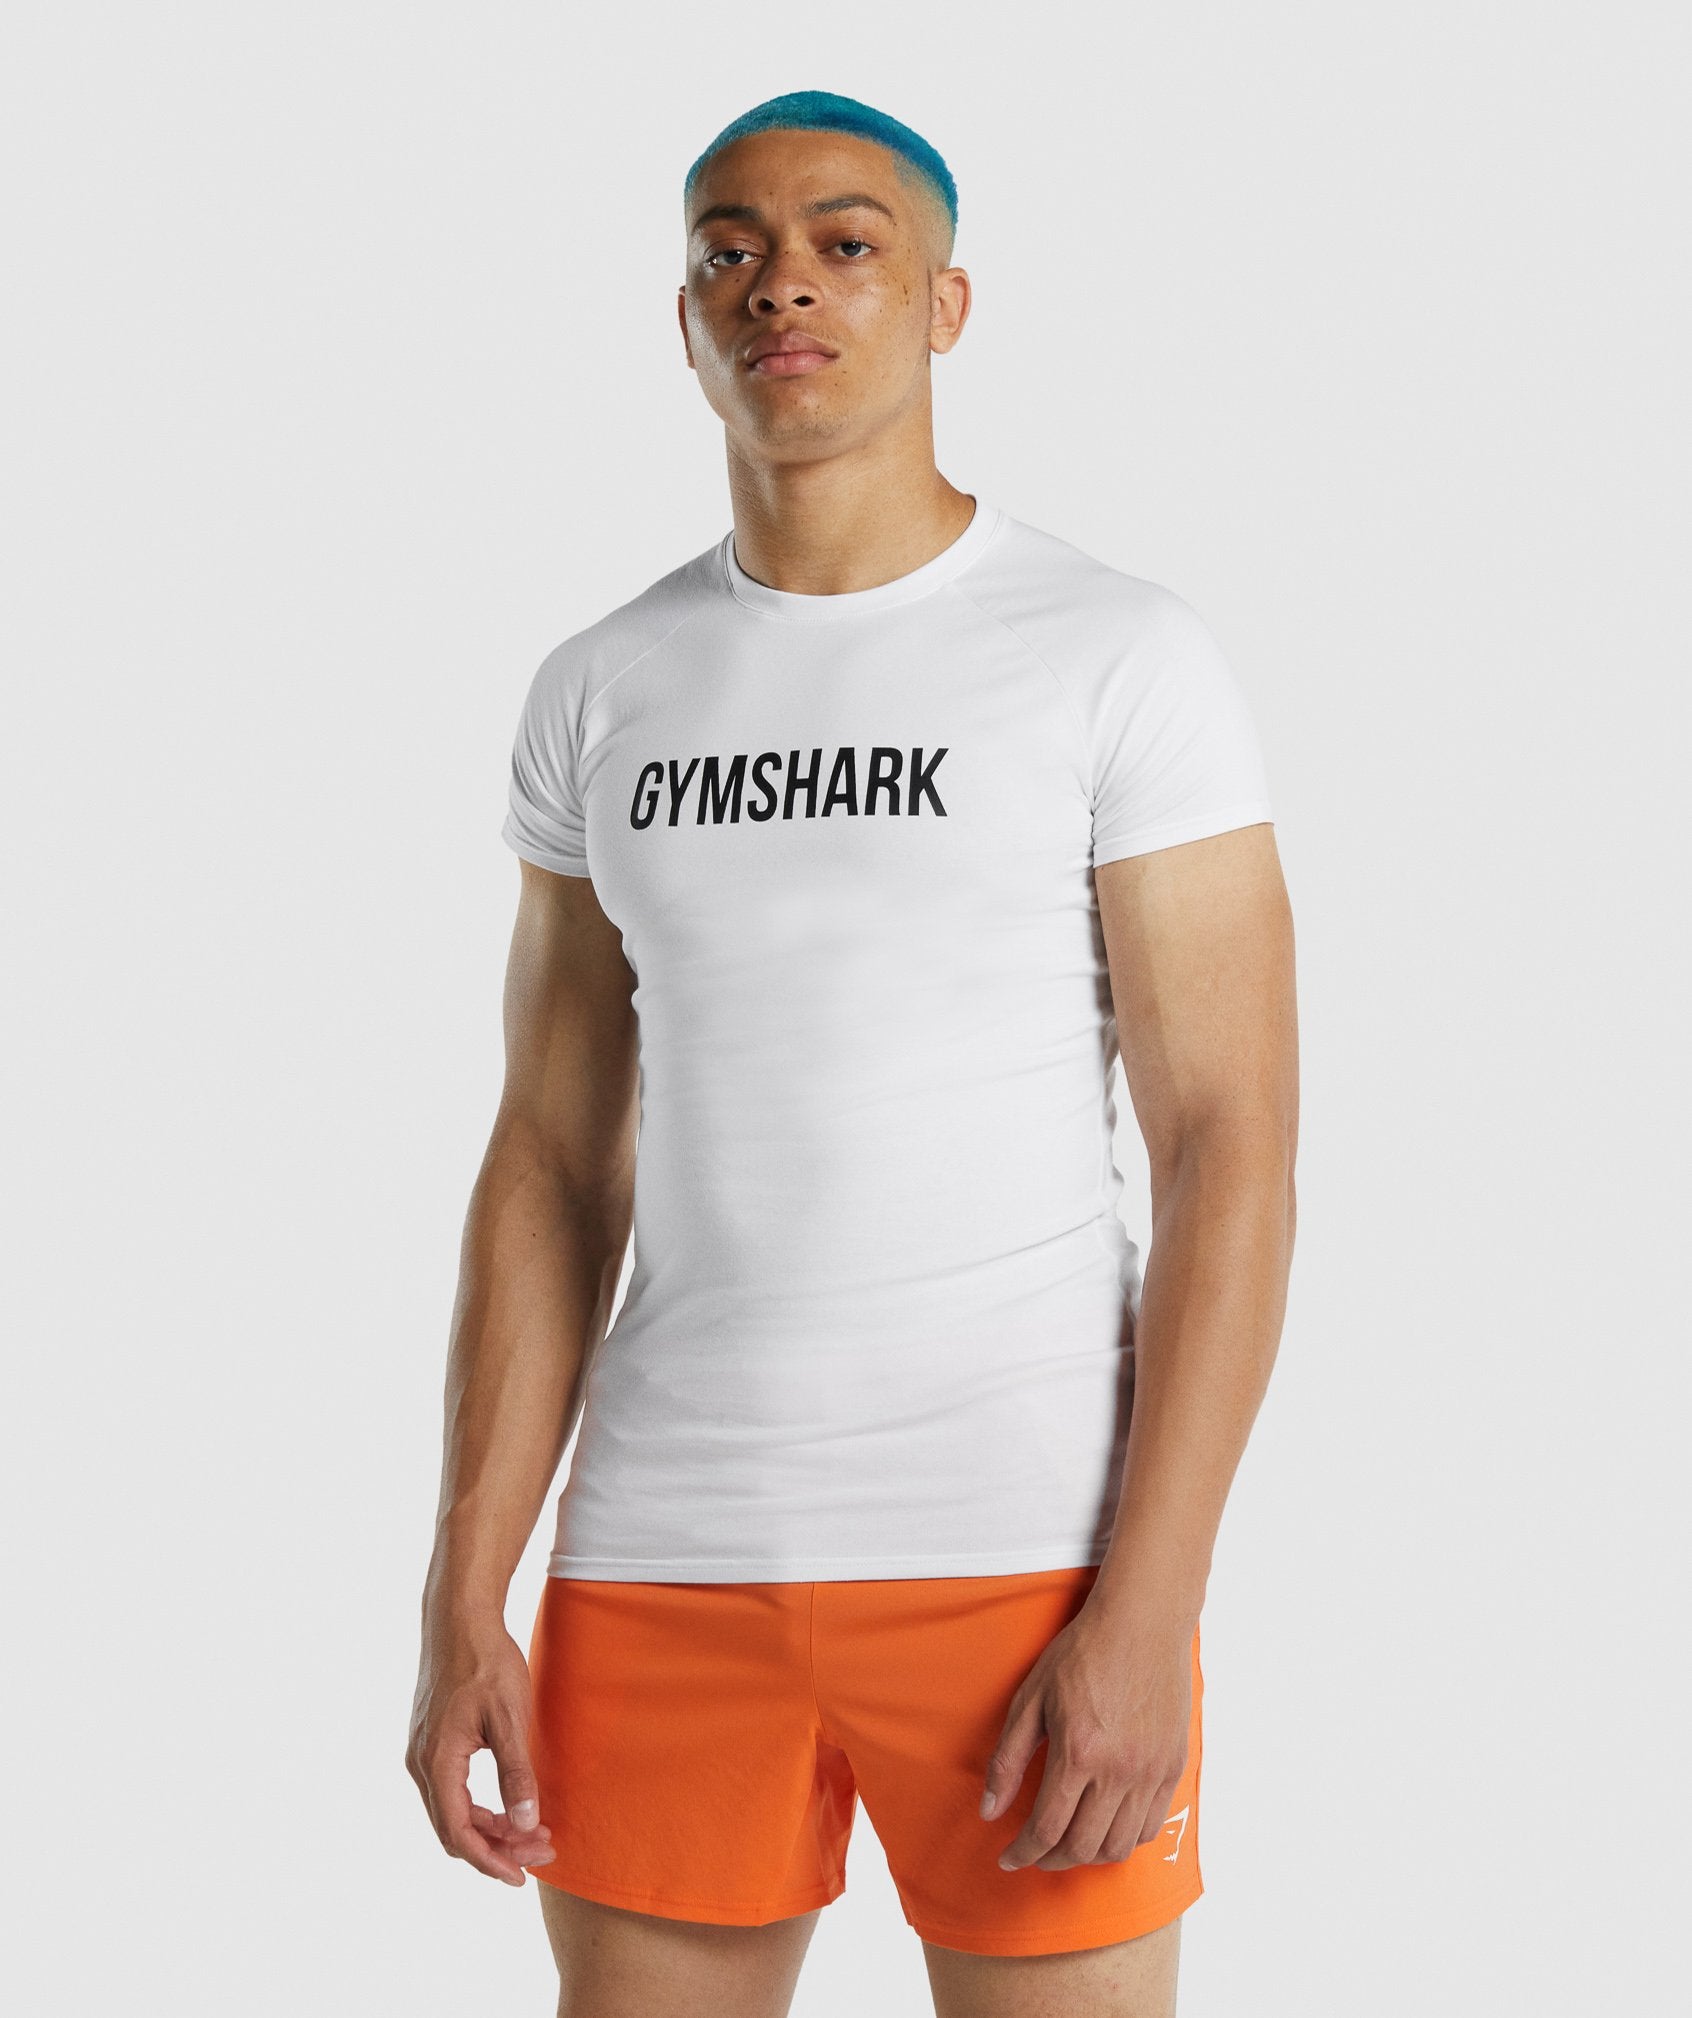 Gymshark Apollo T-Shirt - Navy